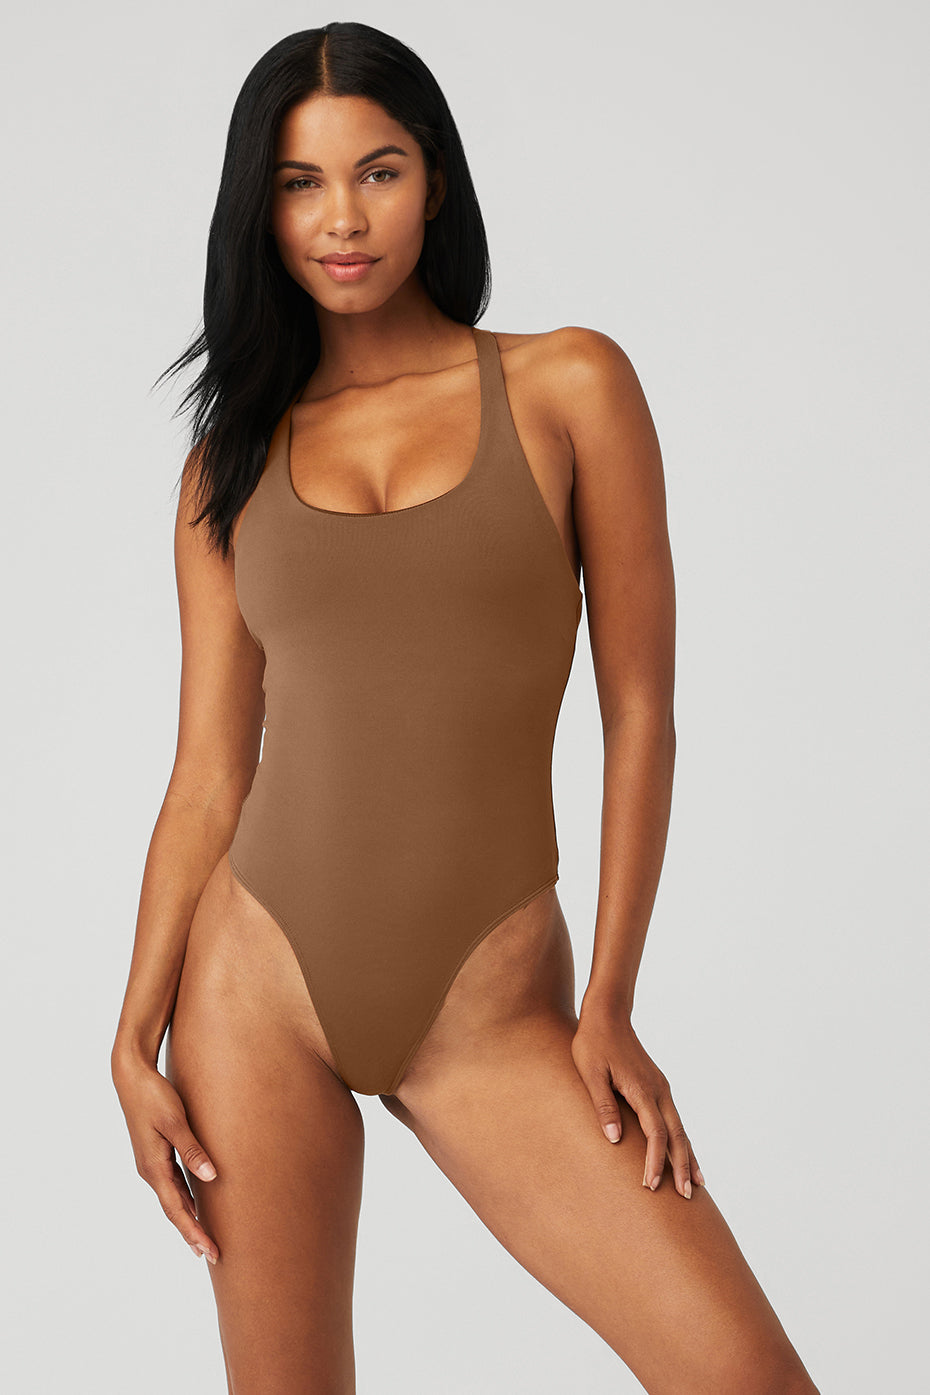 Sleek Back Bodysuit - Cinnamon Brown